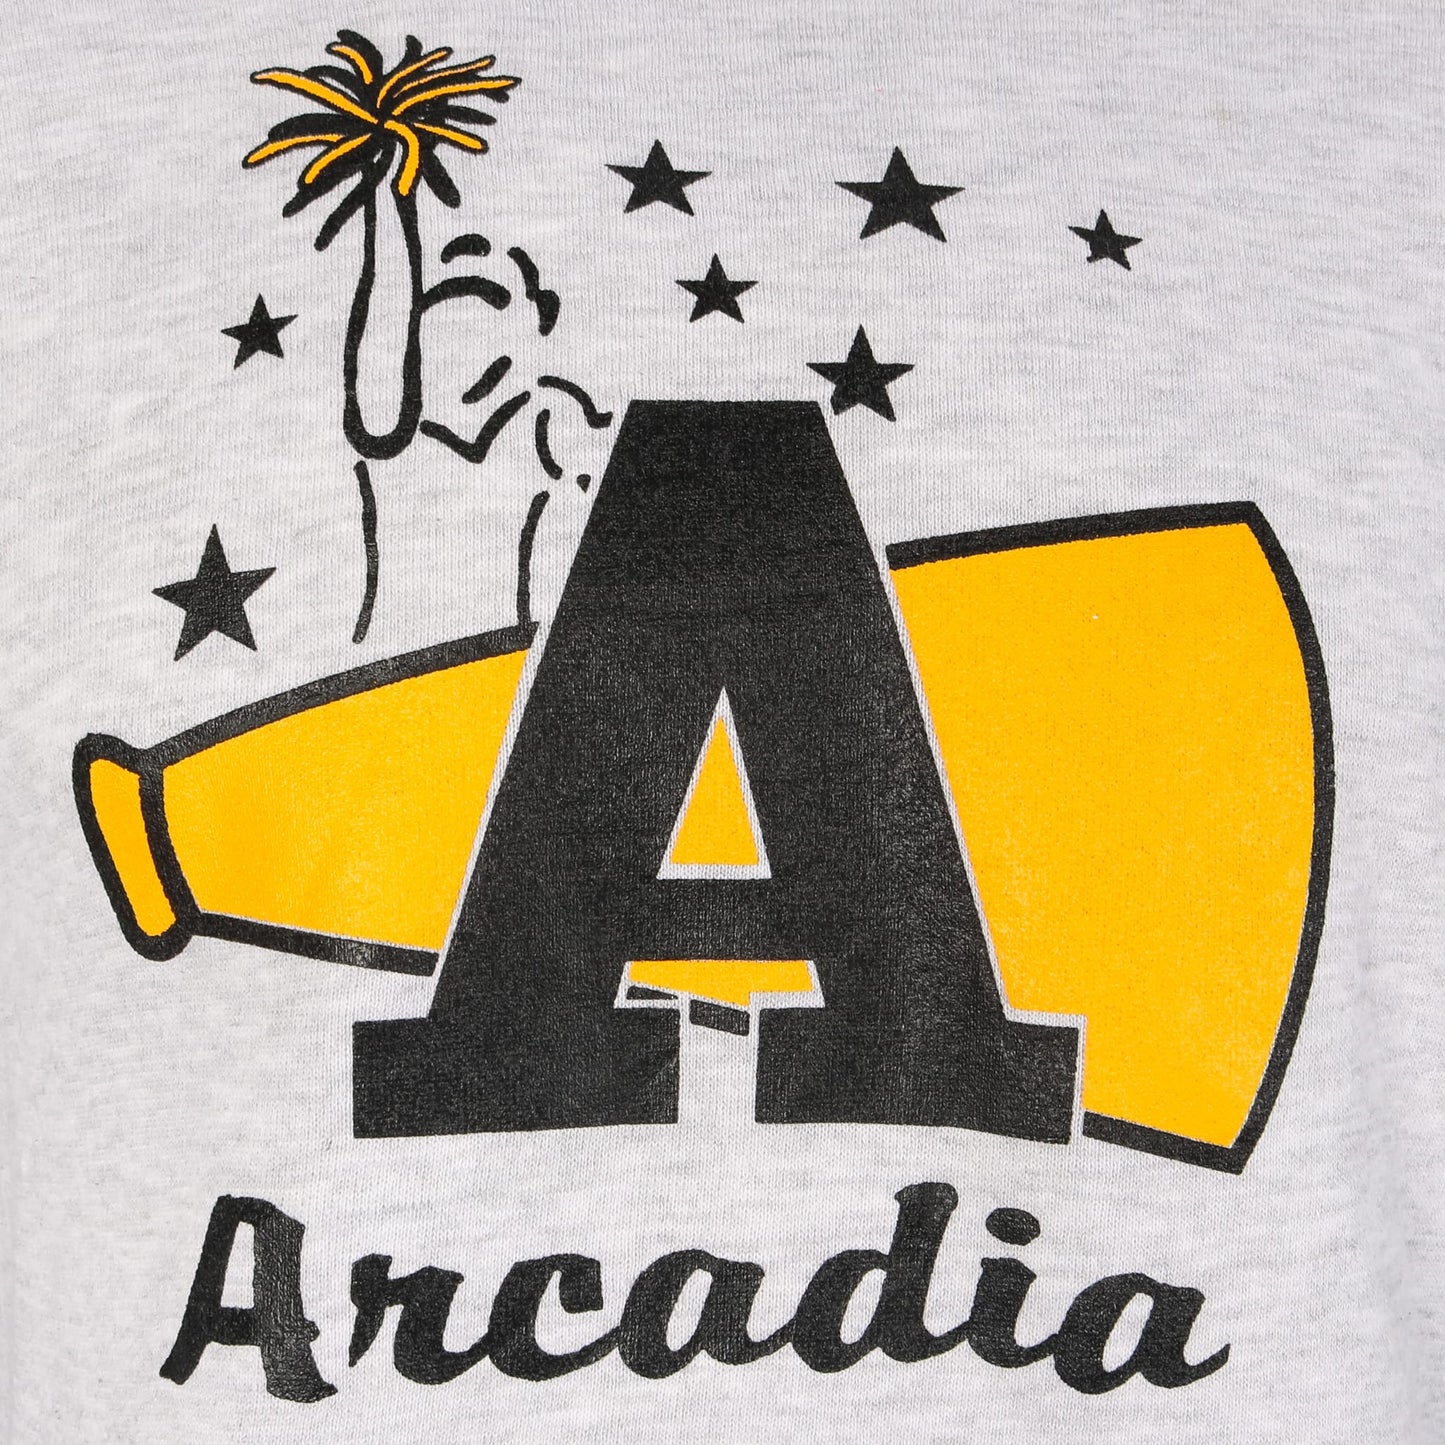 Vintage Sweatshirt - Arcadia - American Madness